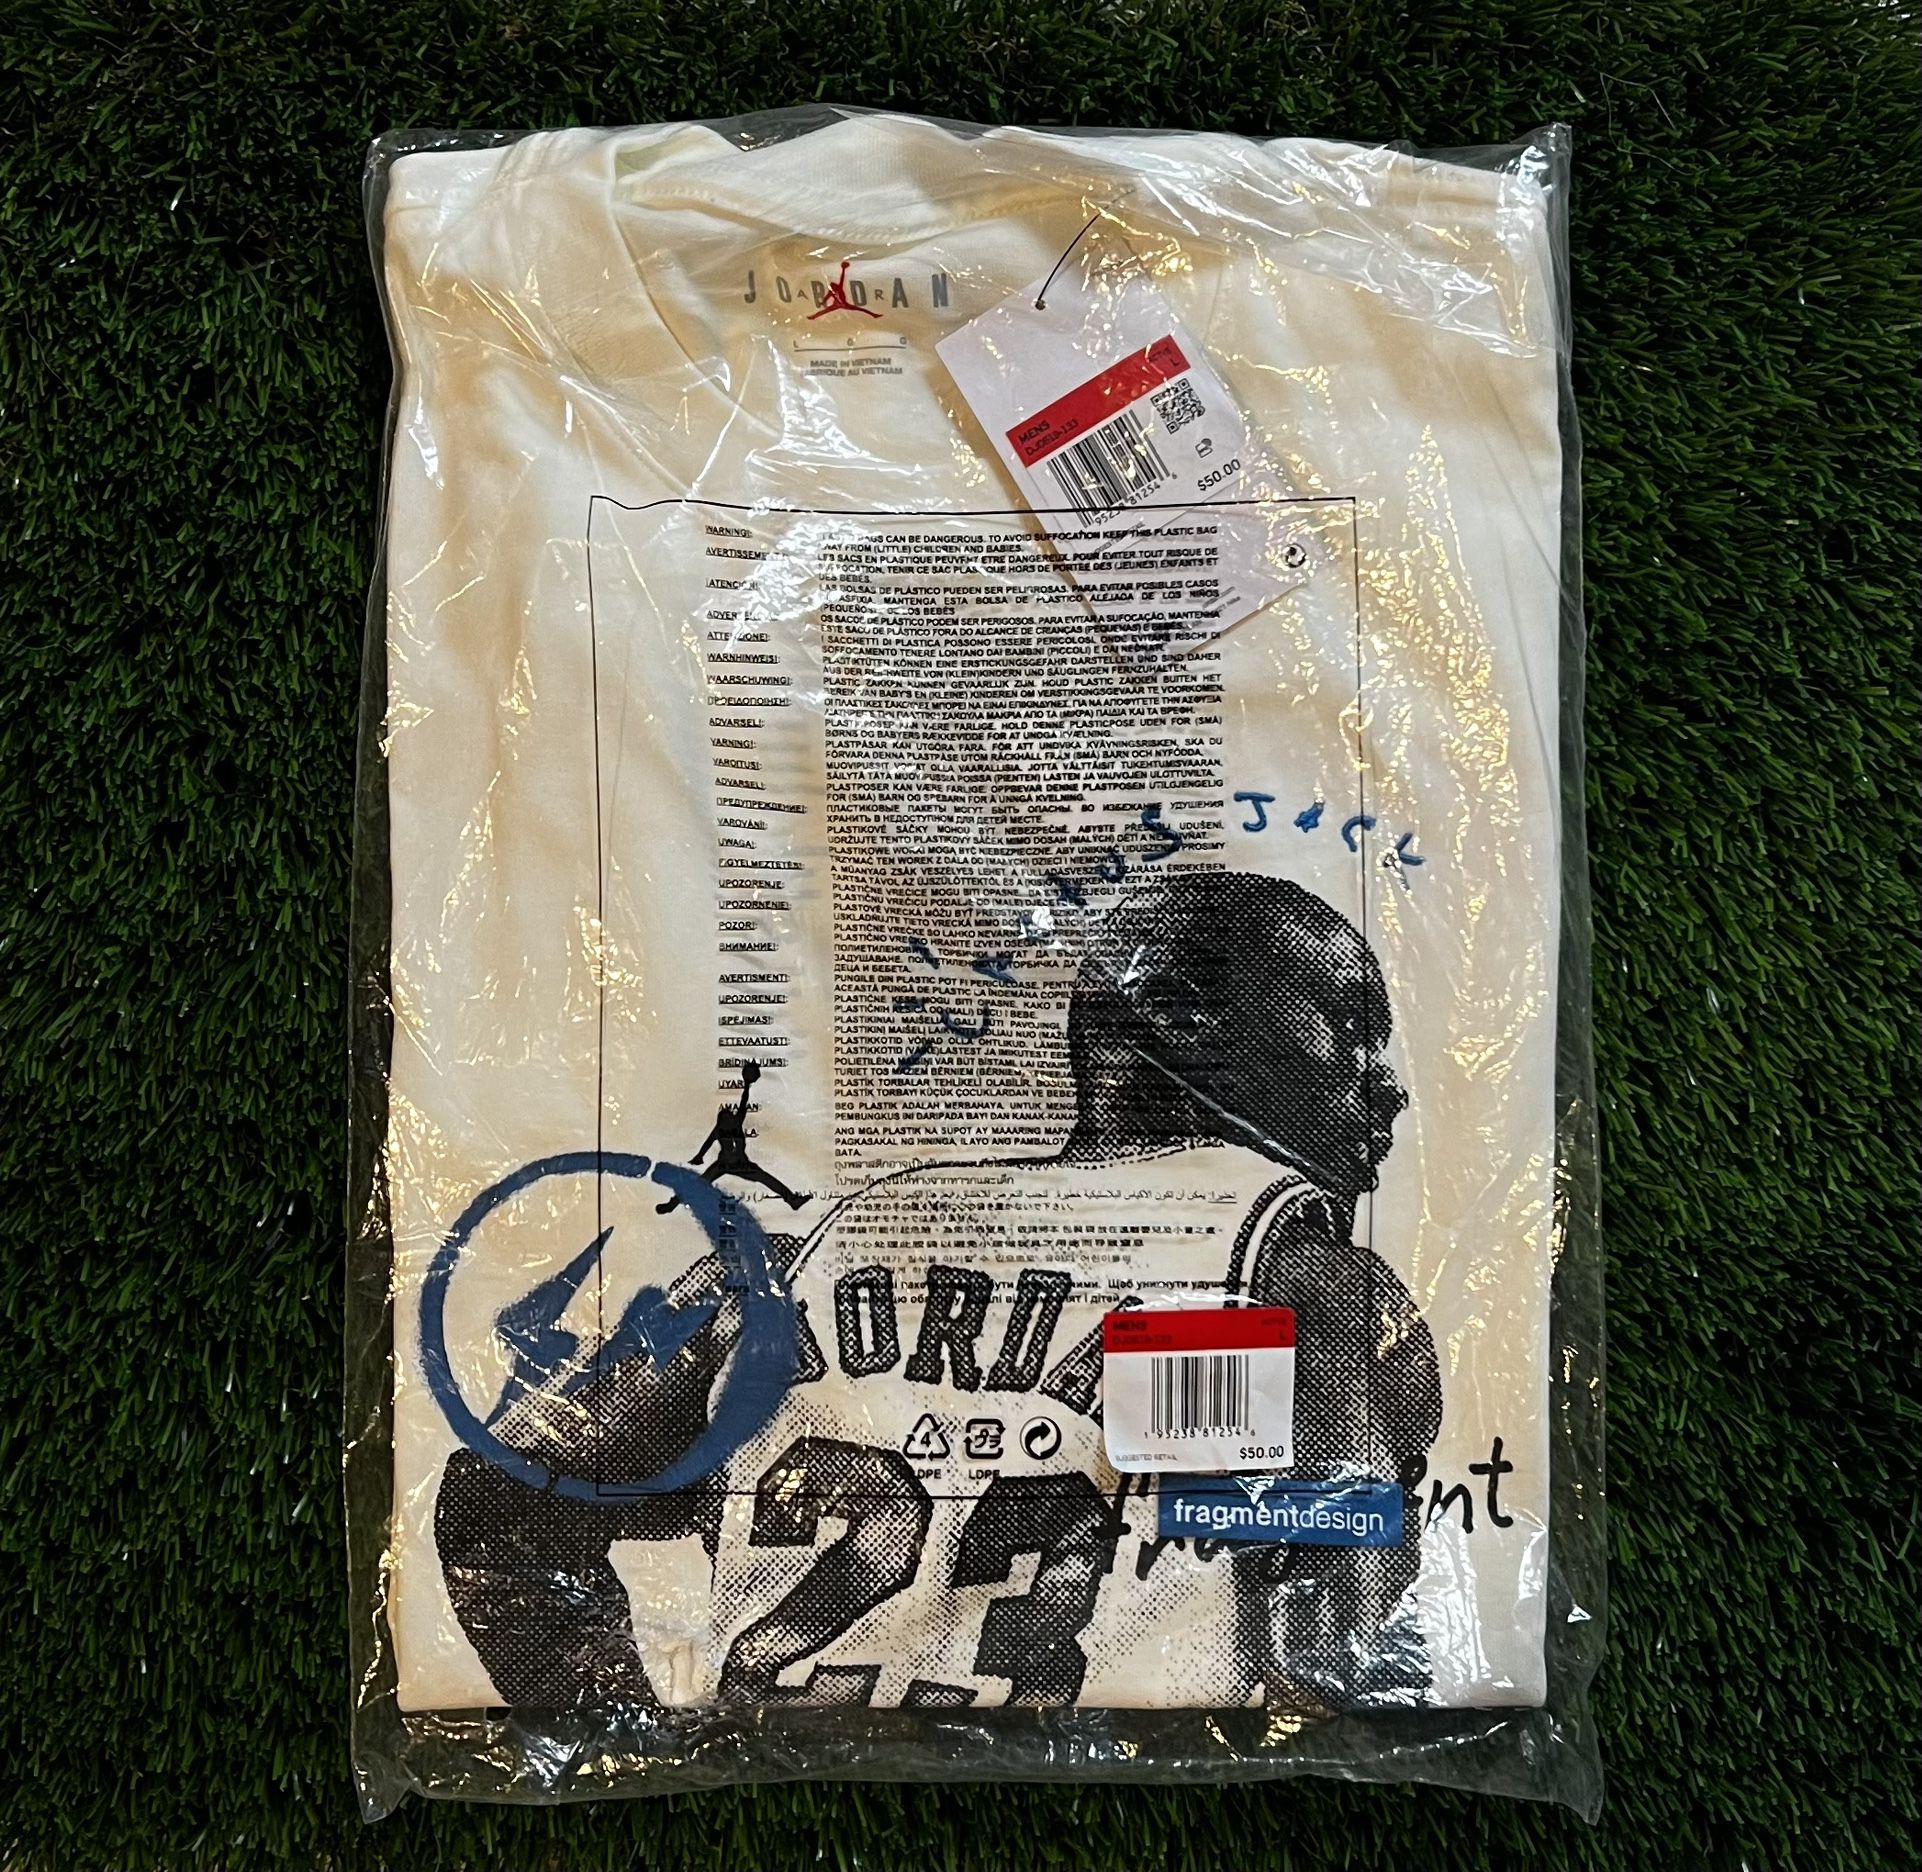 Travis Scott x Jordan × Fragment T-shirt for Sale in Forest Park, IL